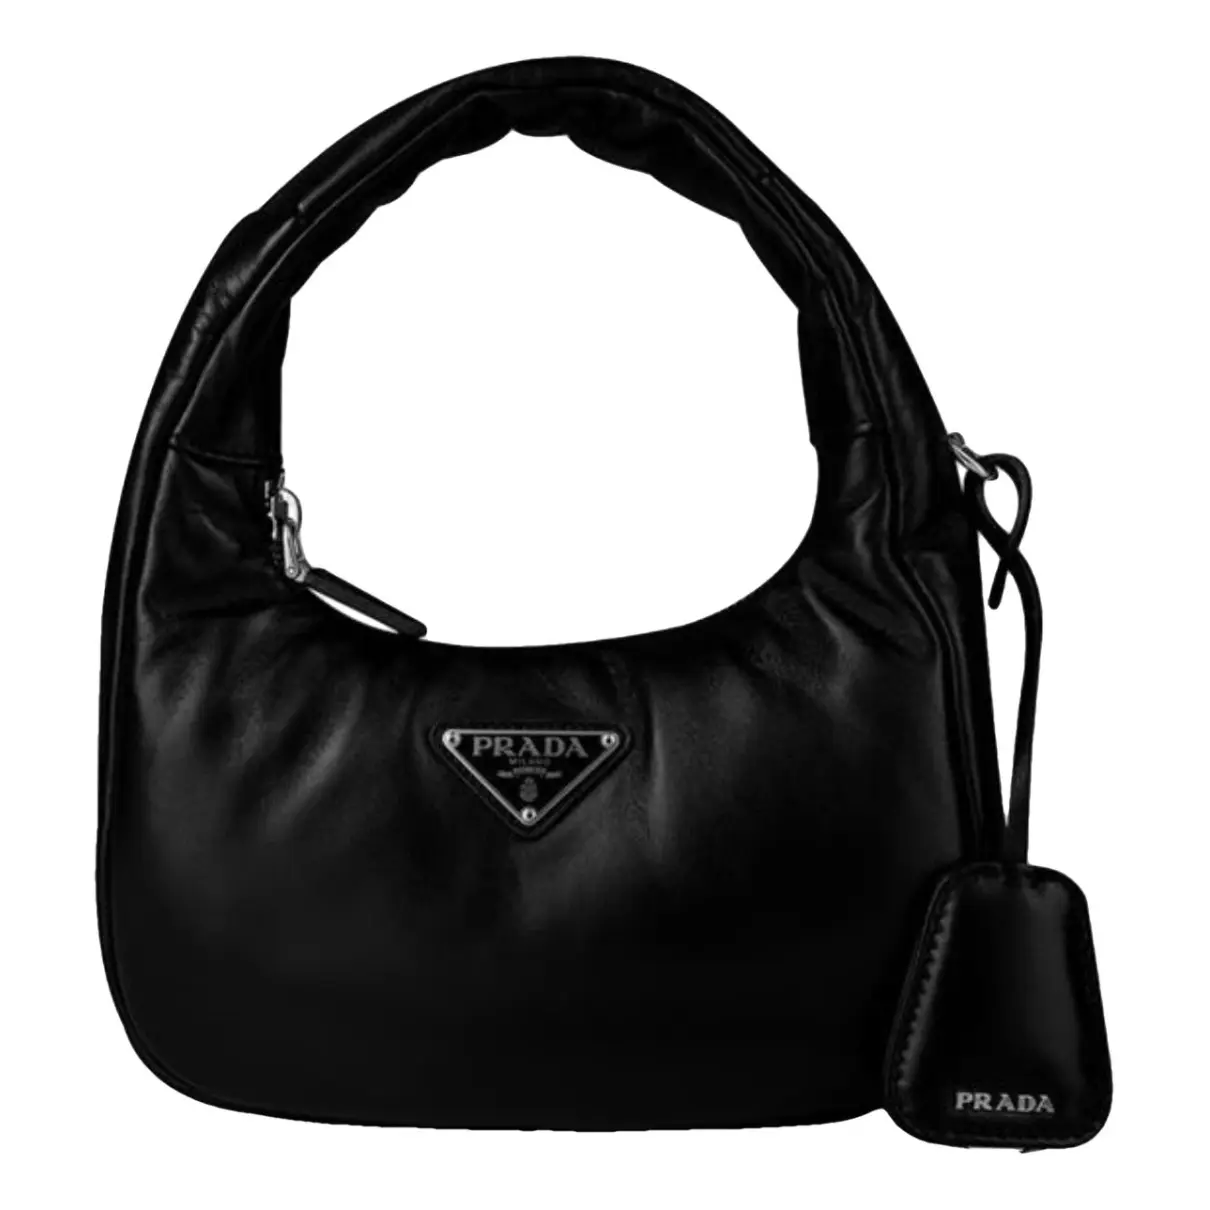 Re-Edition 2000 leather handbag